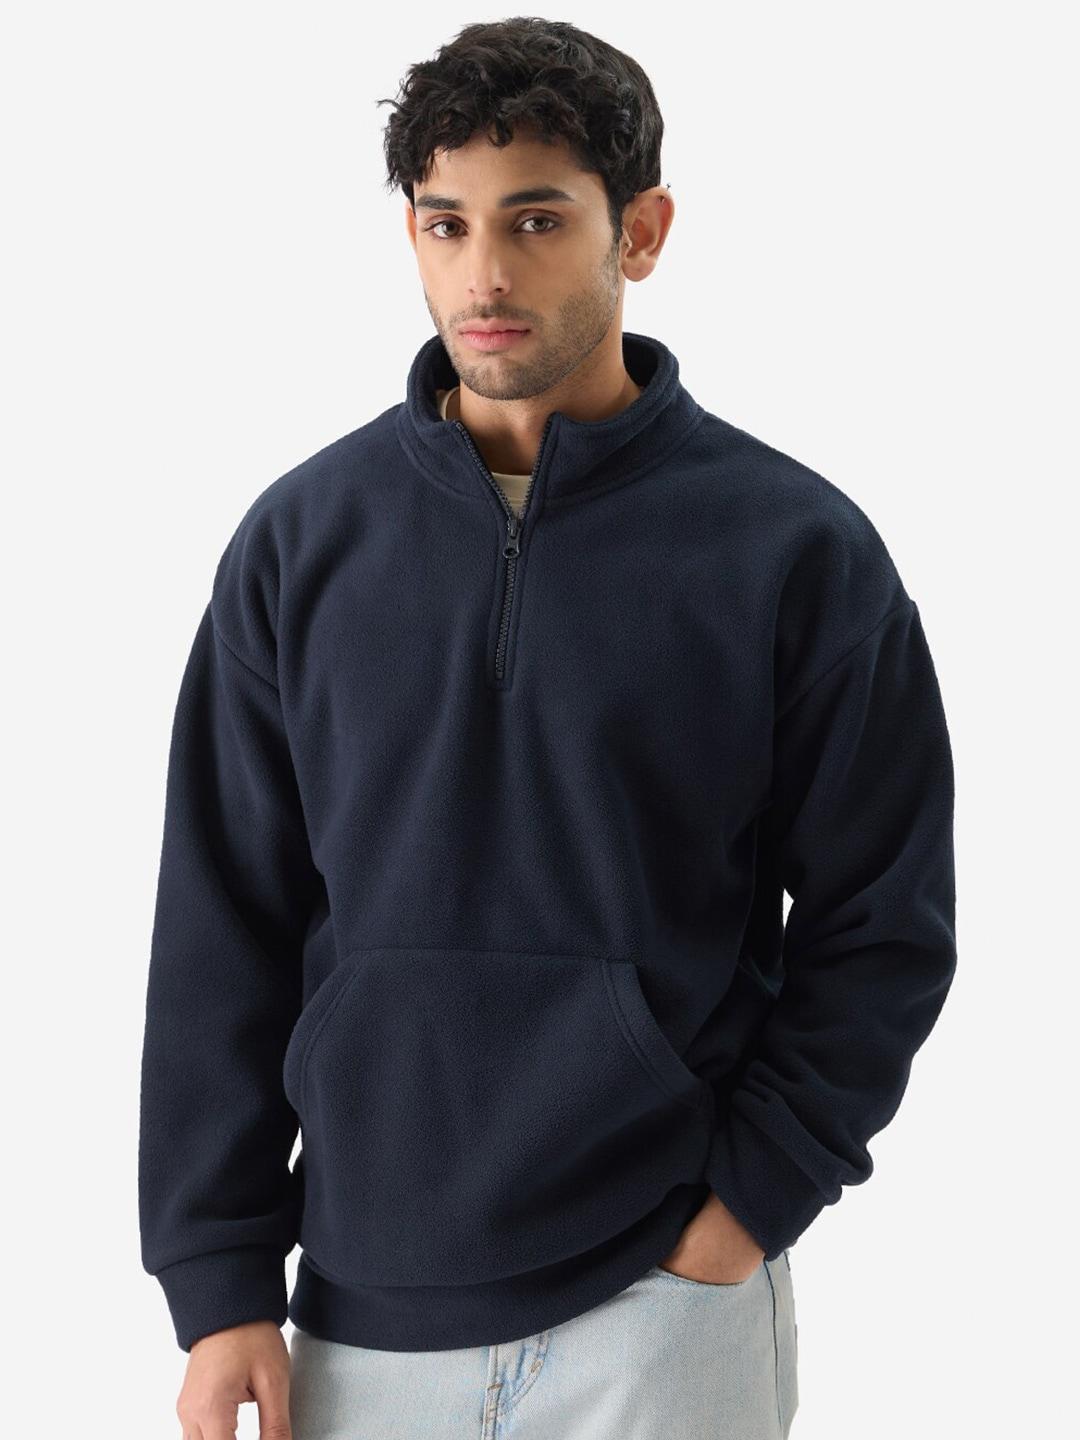 the-souled-store-men-sweatshirt